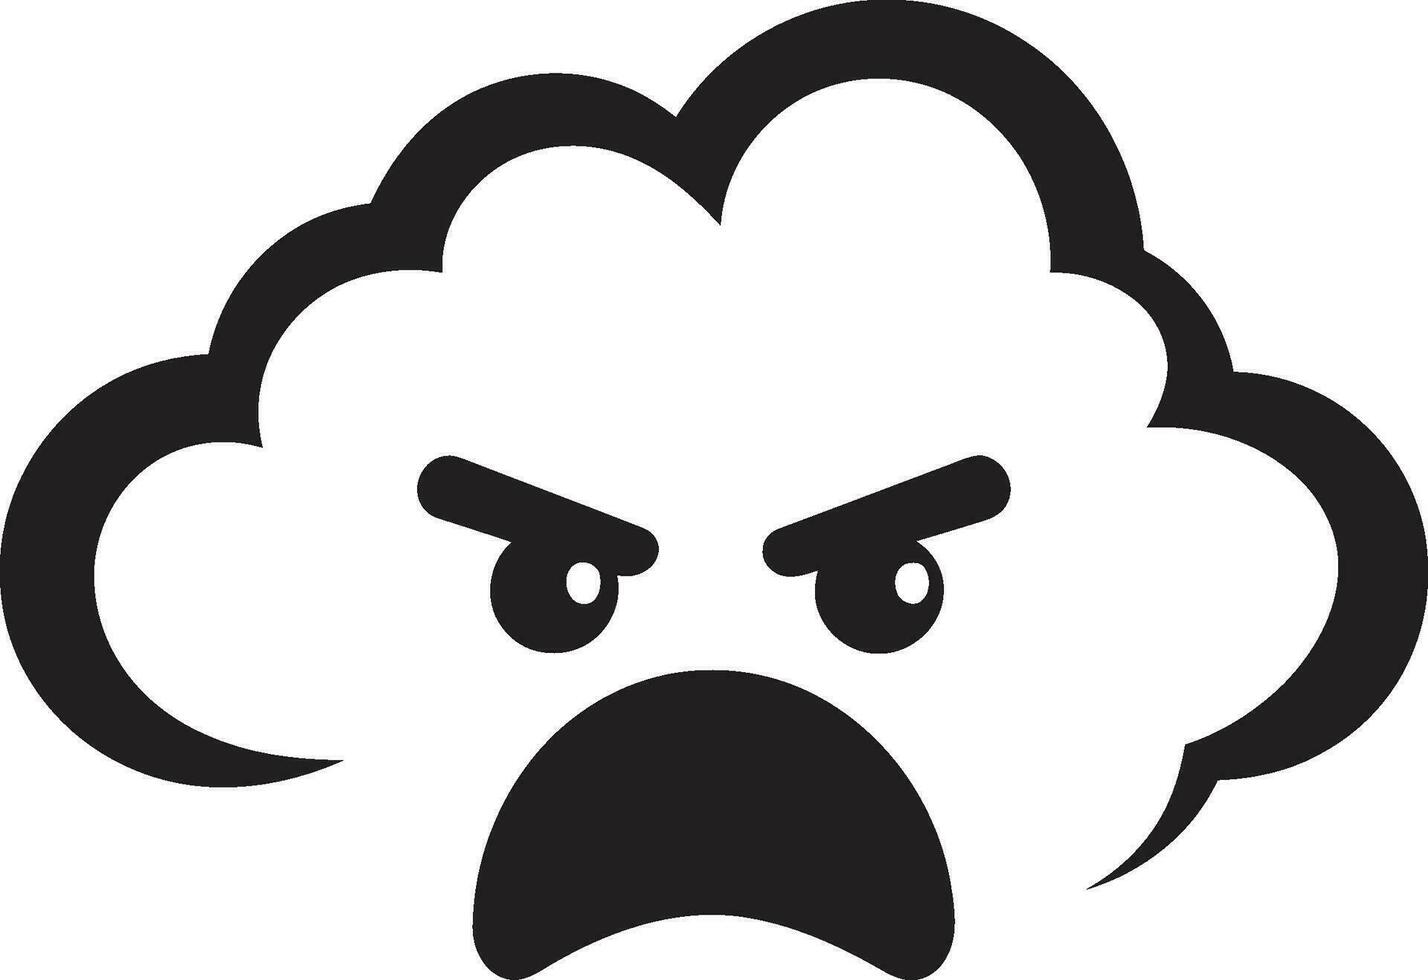 furioso nimbo arrabbiato nube design furioso tempesta nero arrabbiato nube emblema vettore